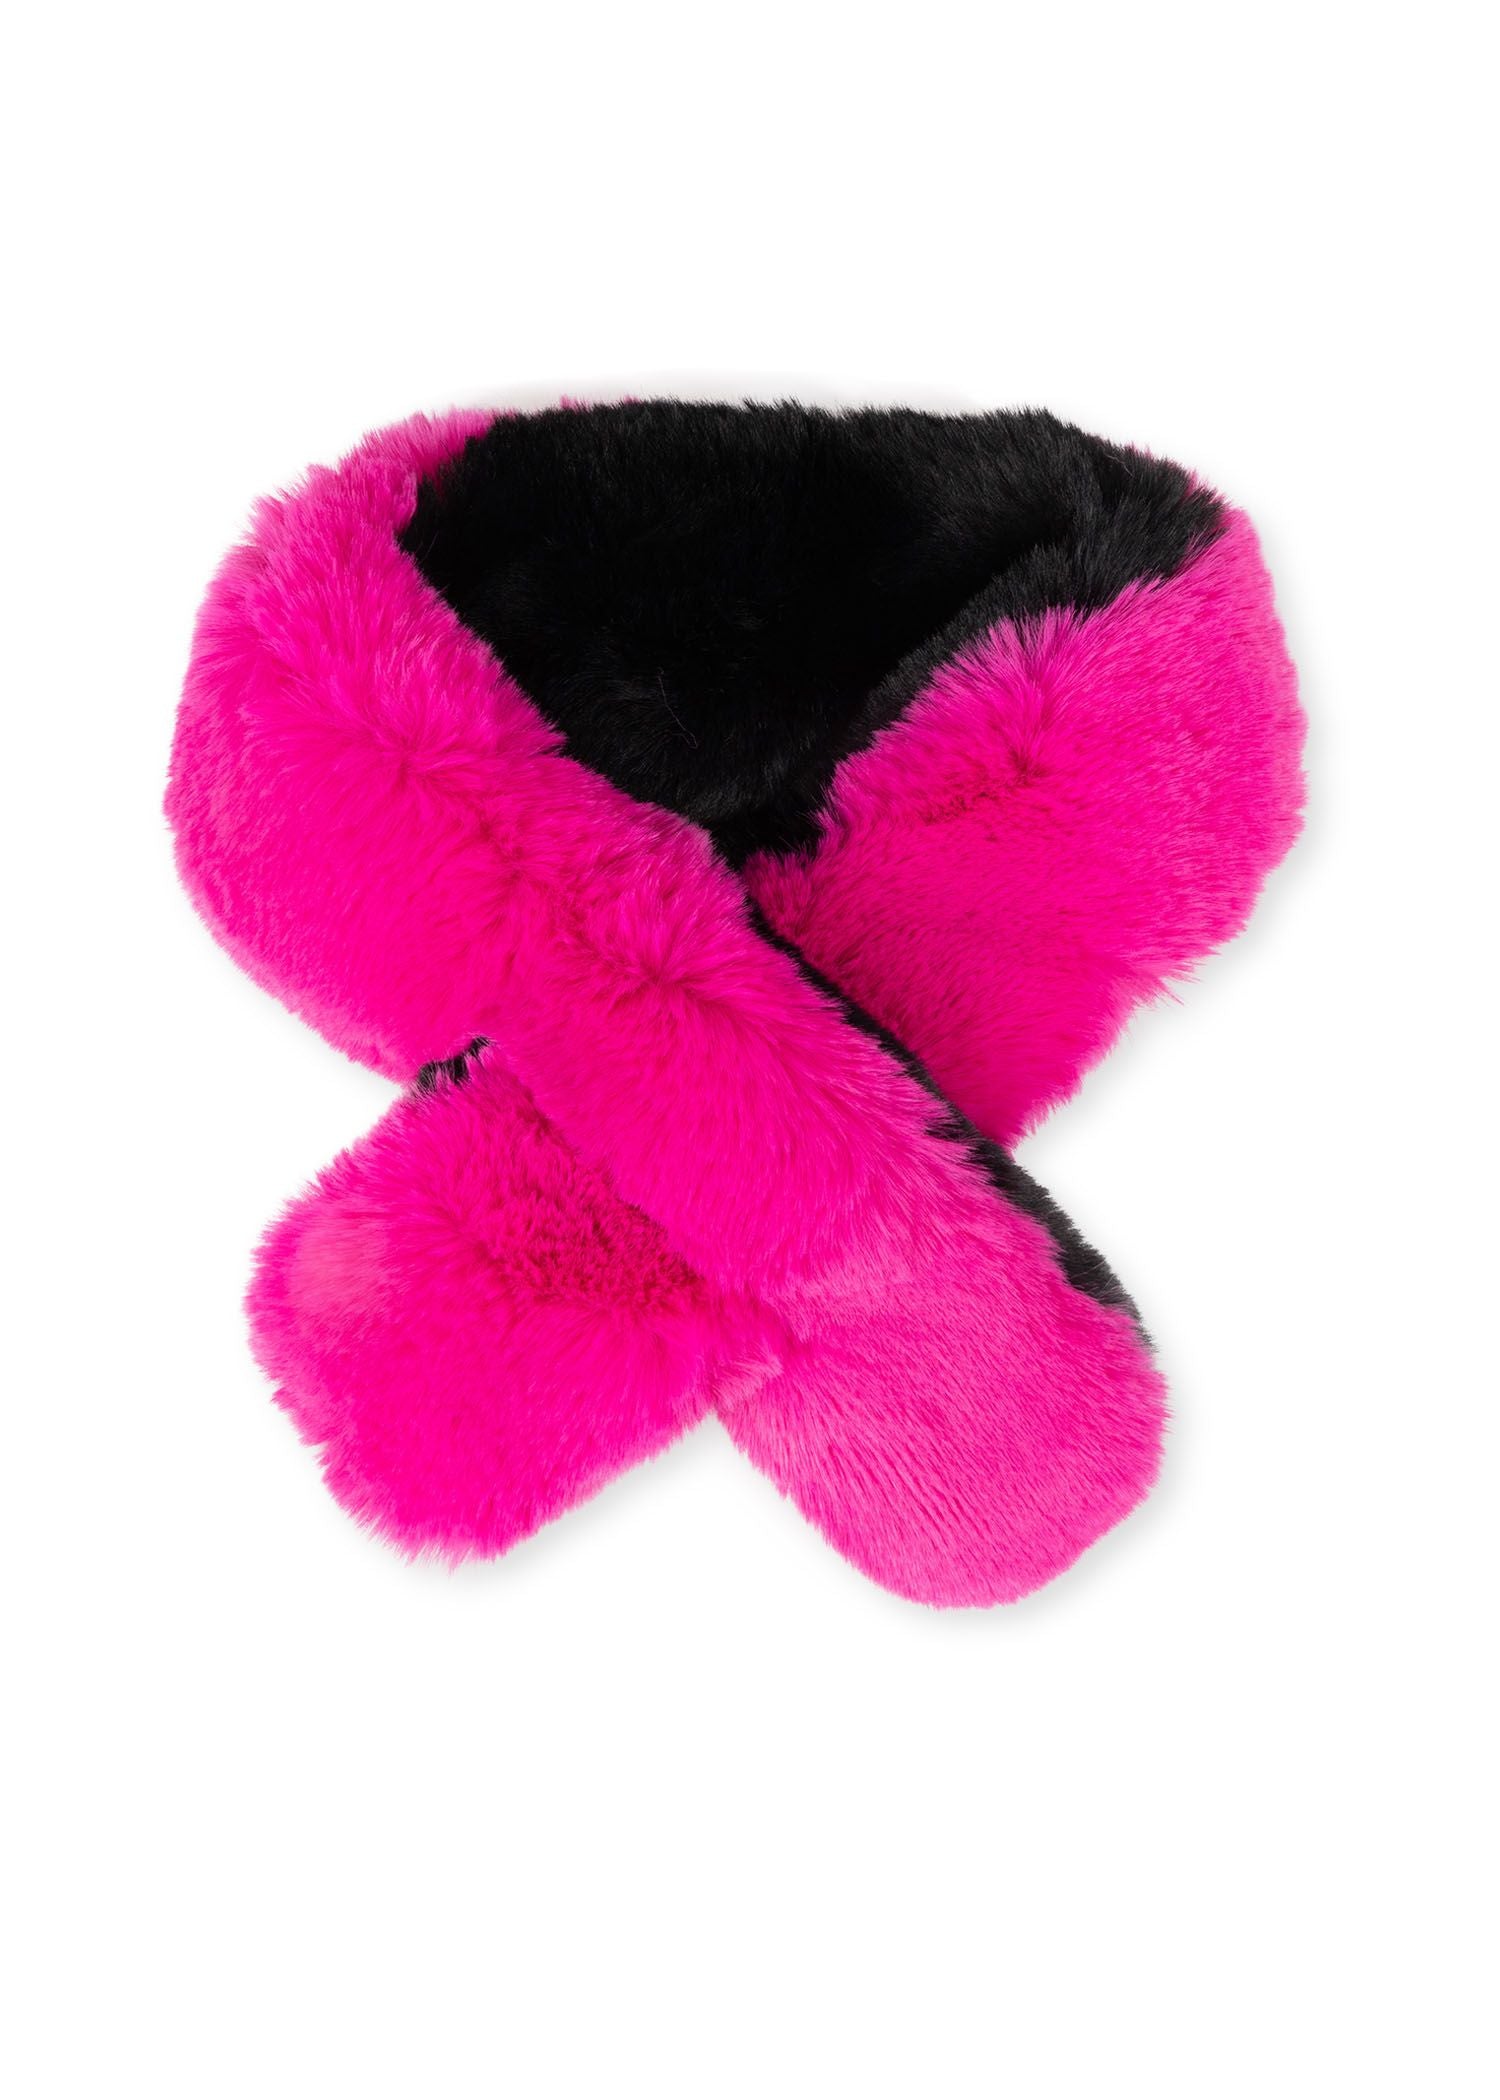 whistler scarf faux fur hot pink/black